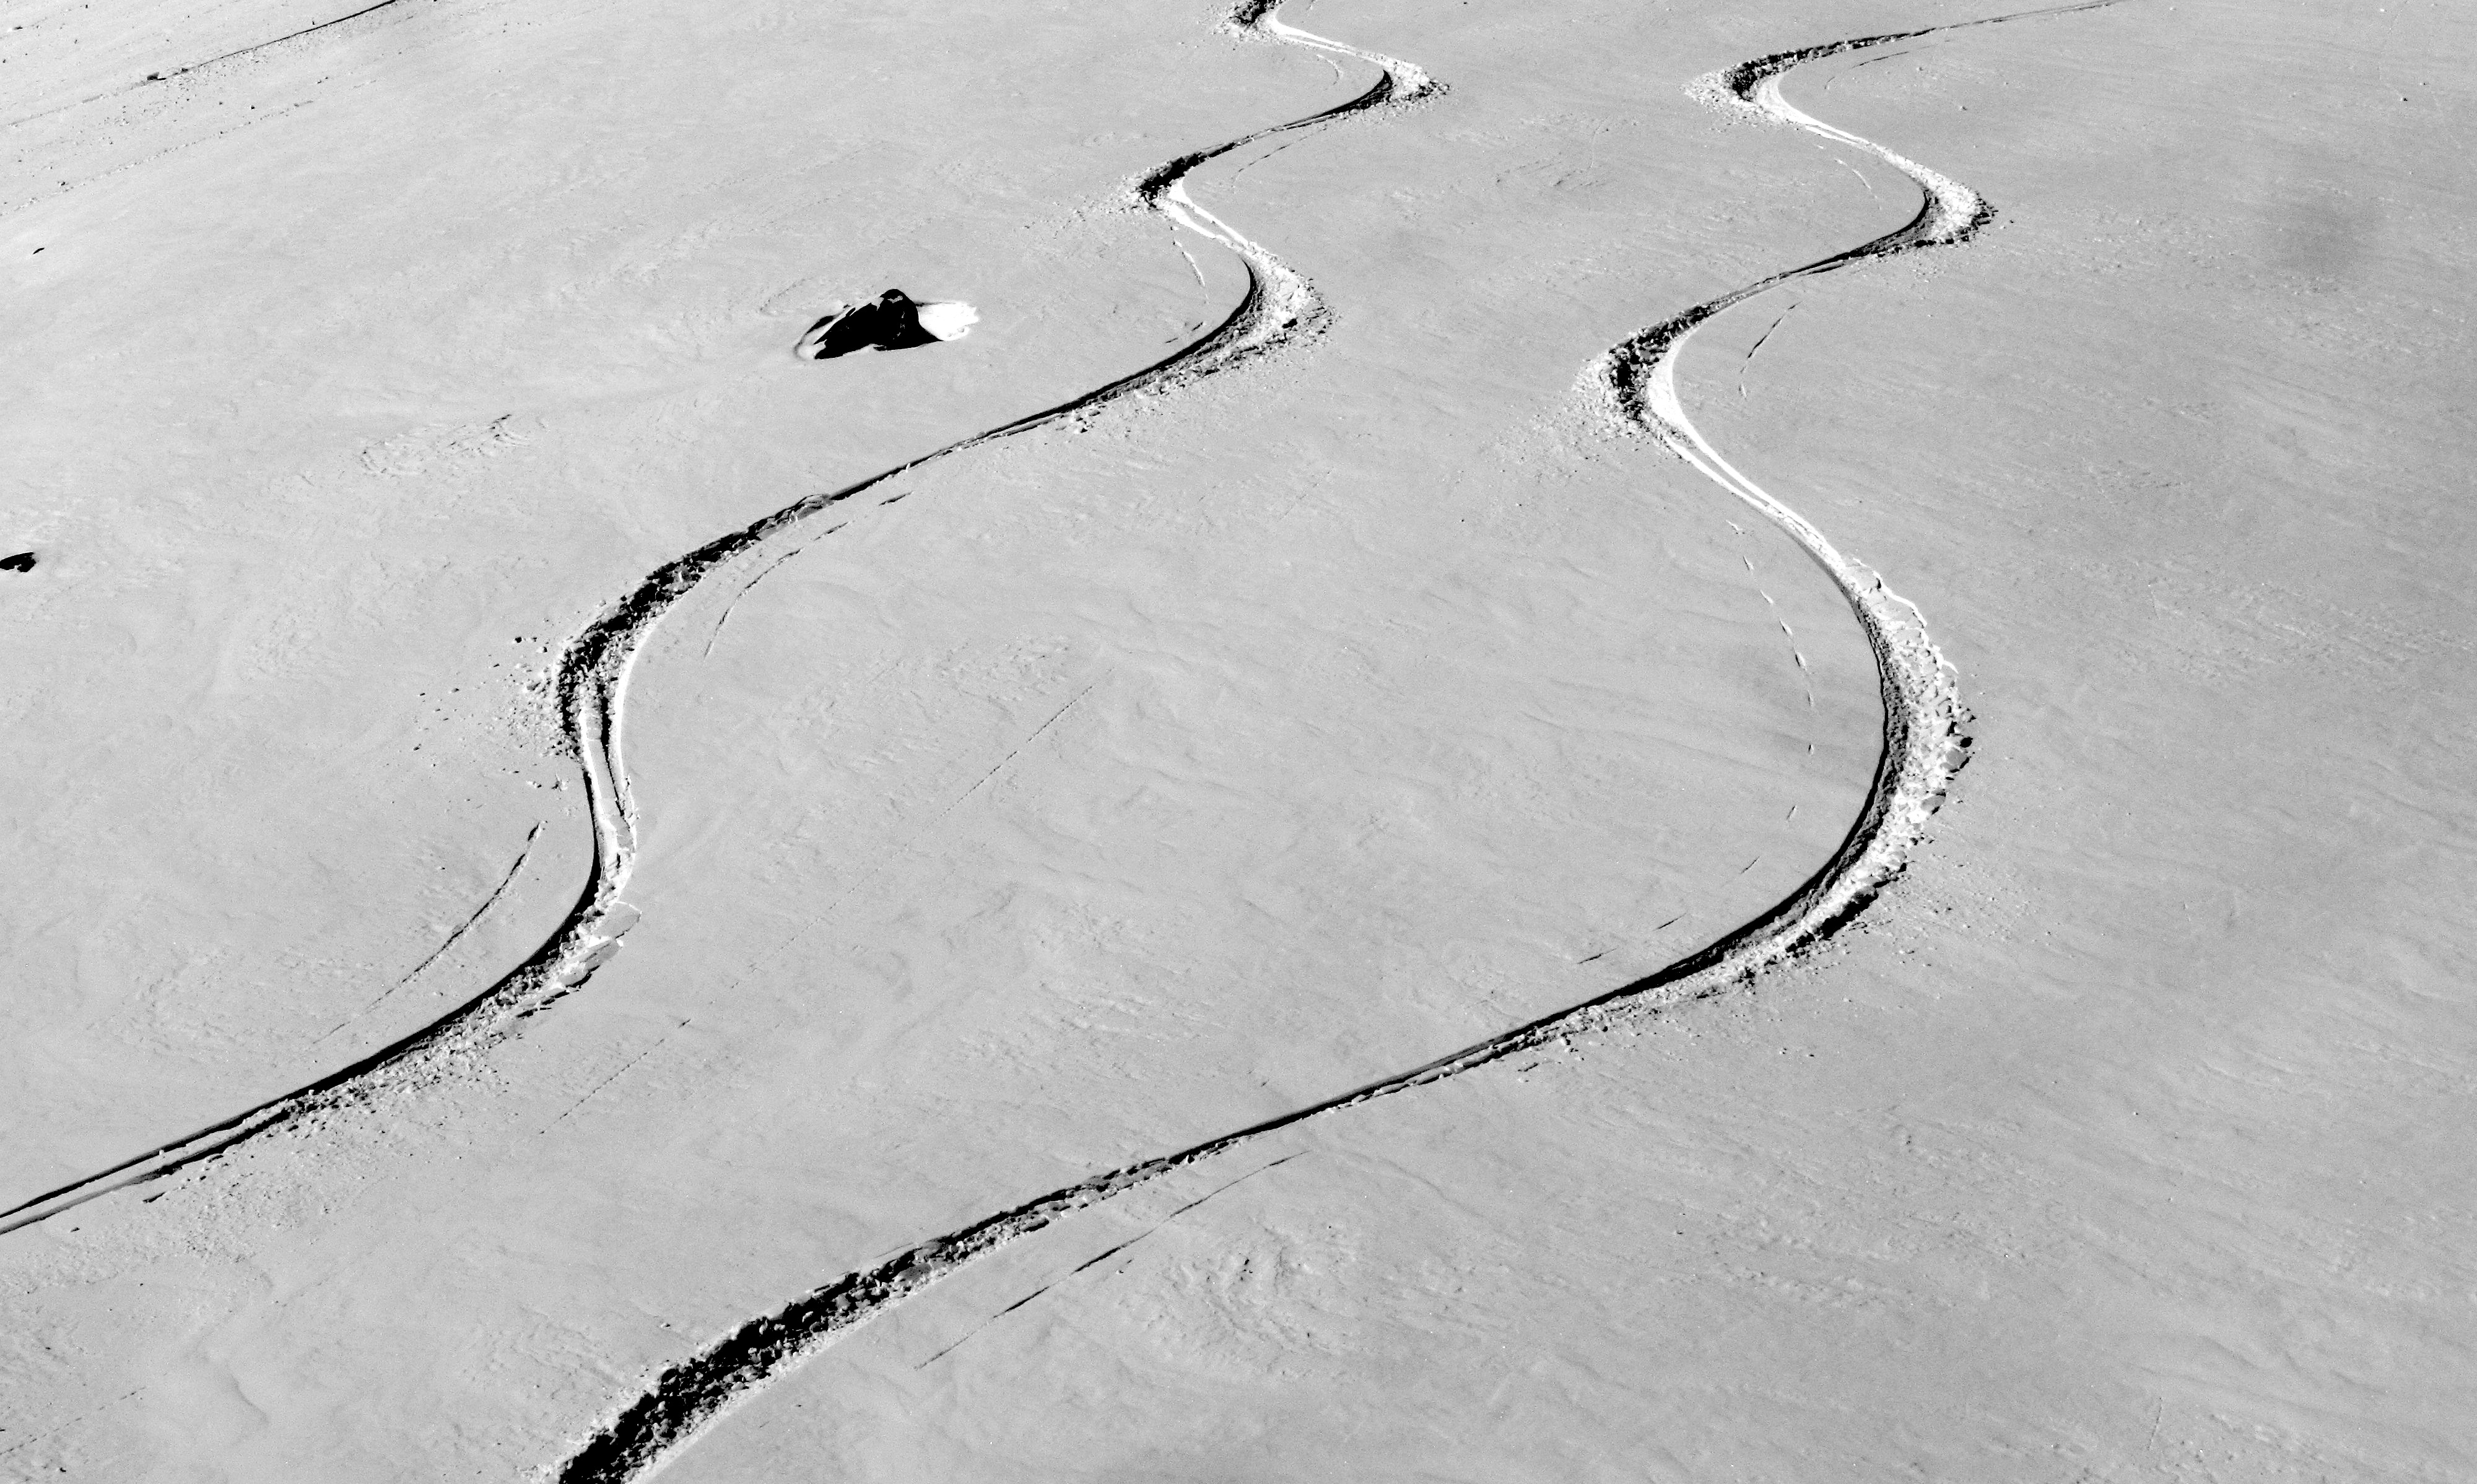 Headwall tracks today. photo: snowbrains